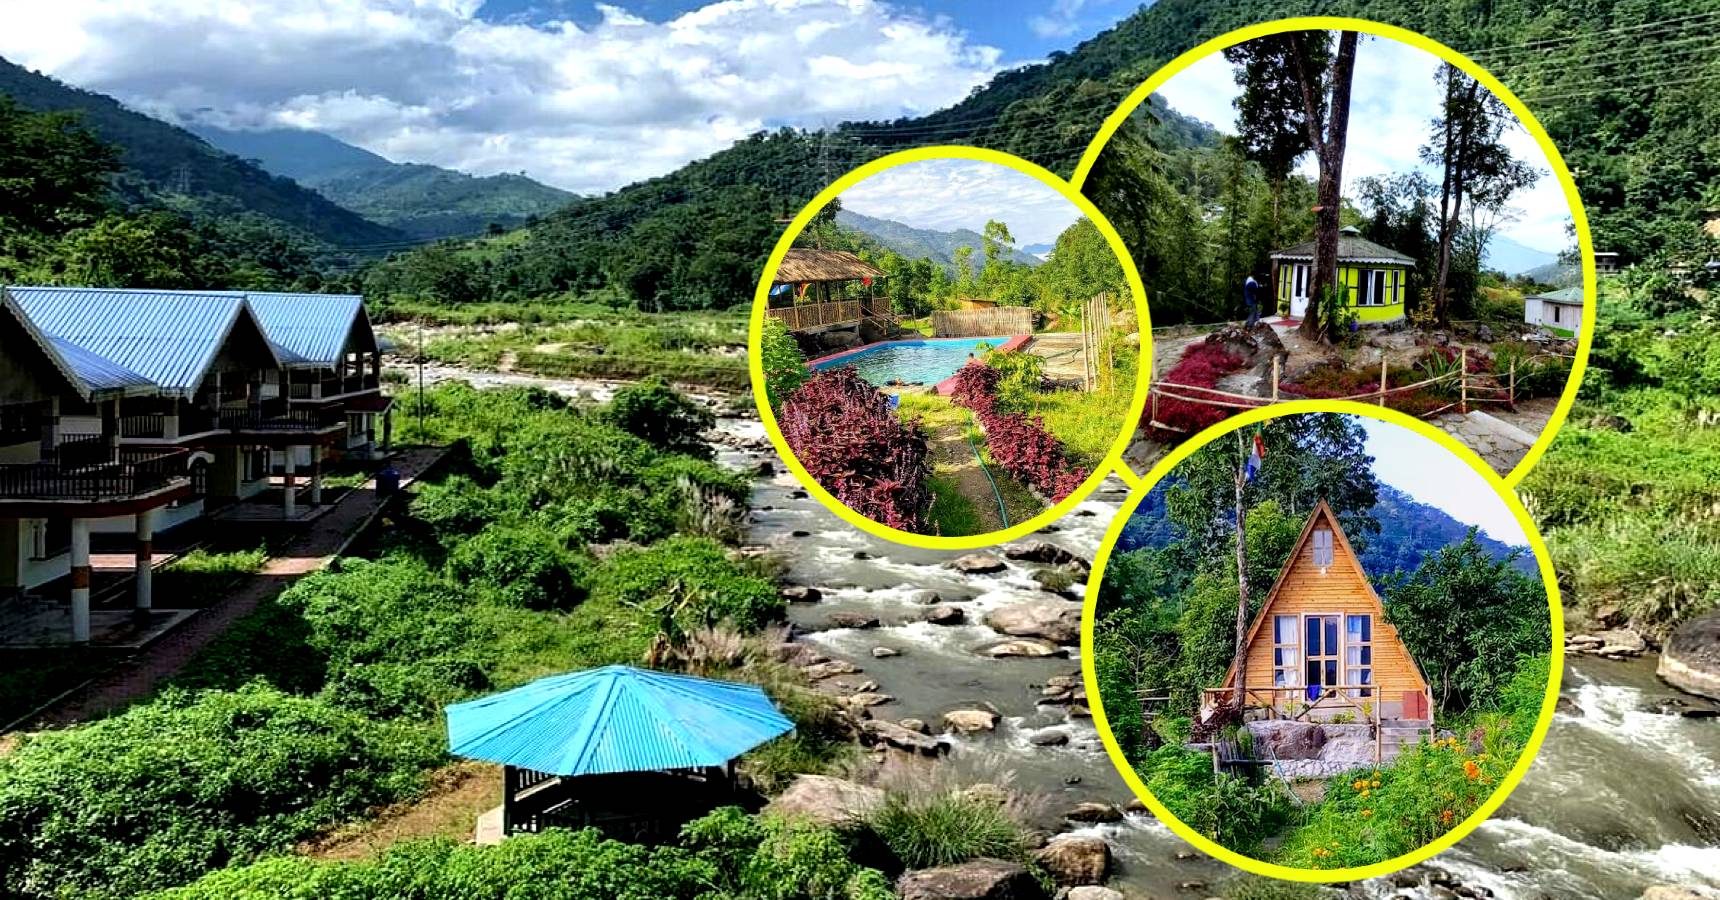 Bijanbari near Darjeeling is the new travel destination in North Bengal